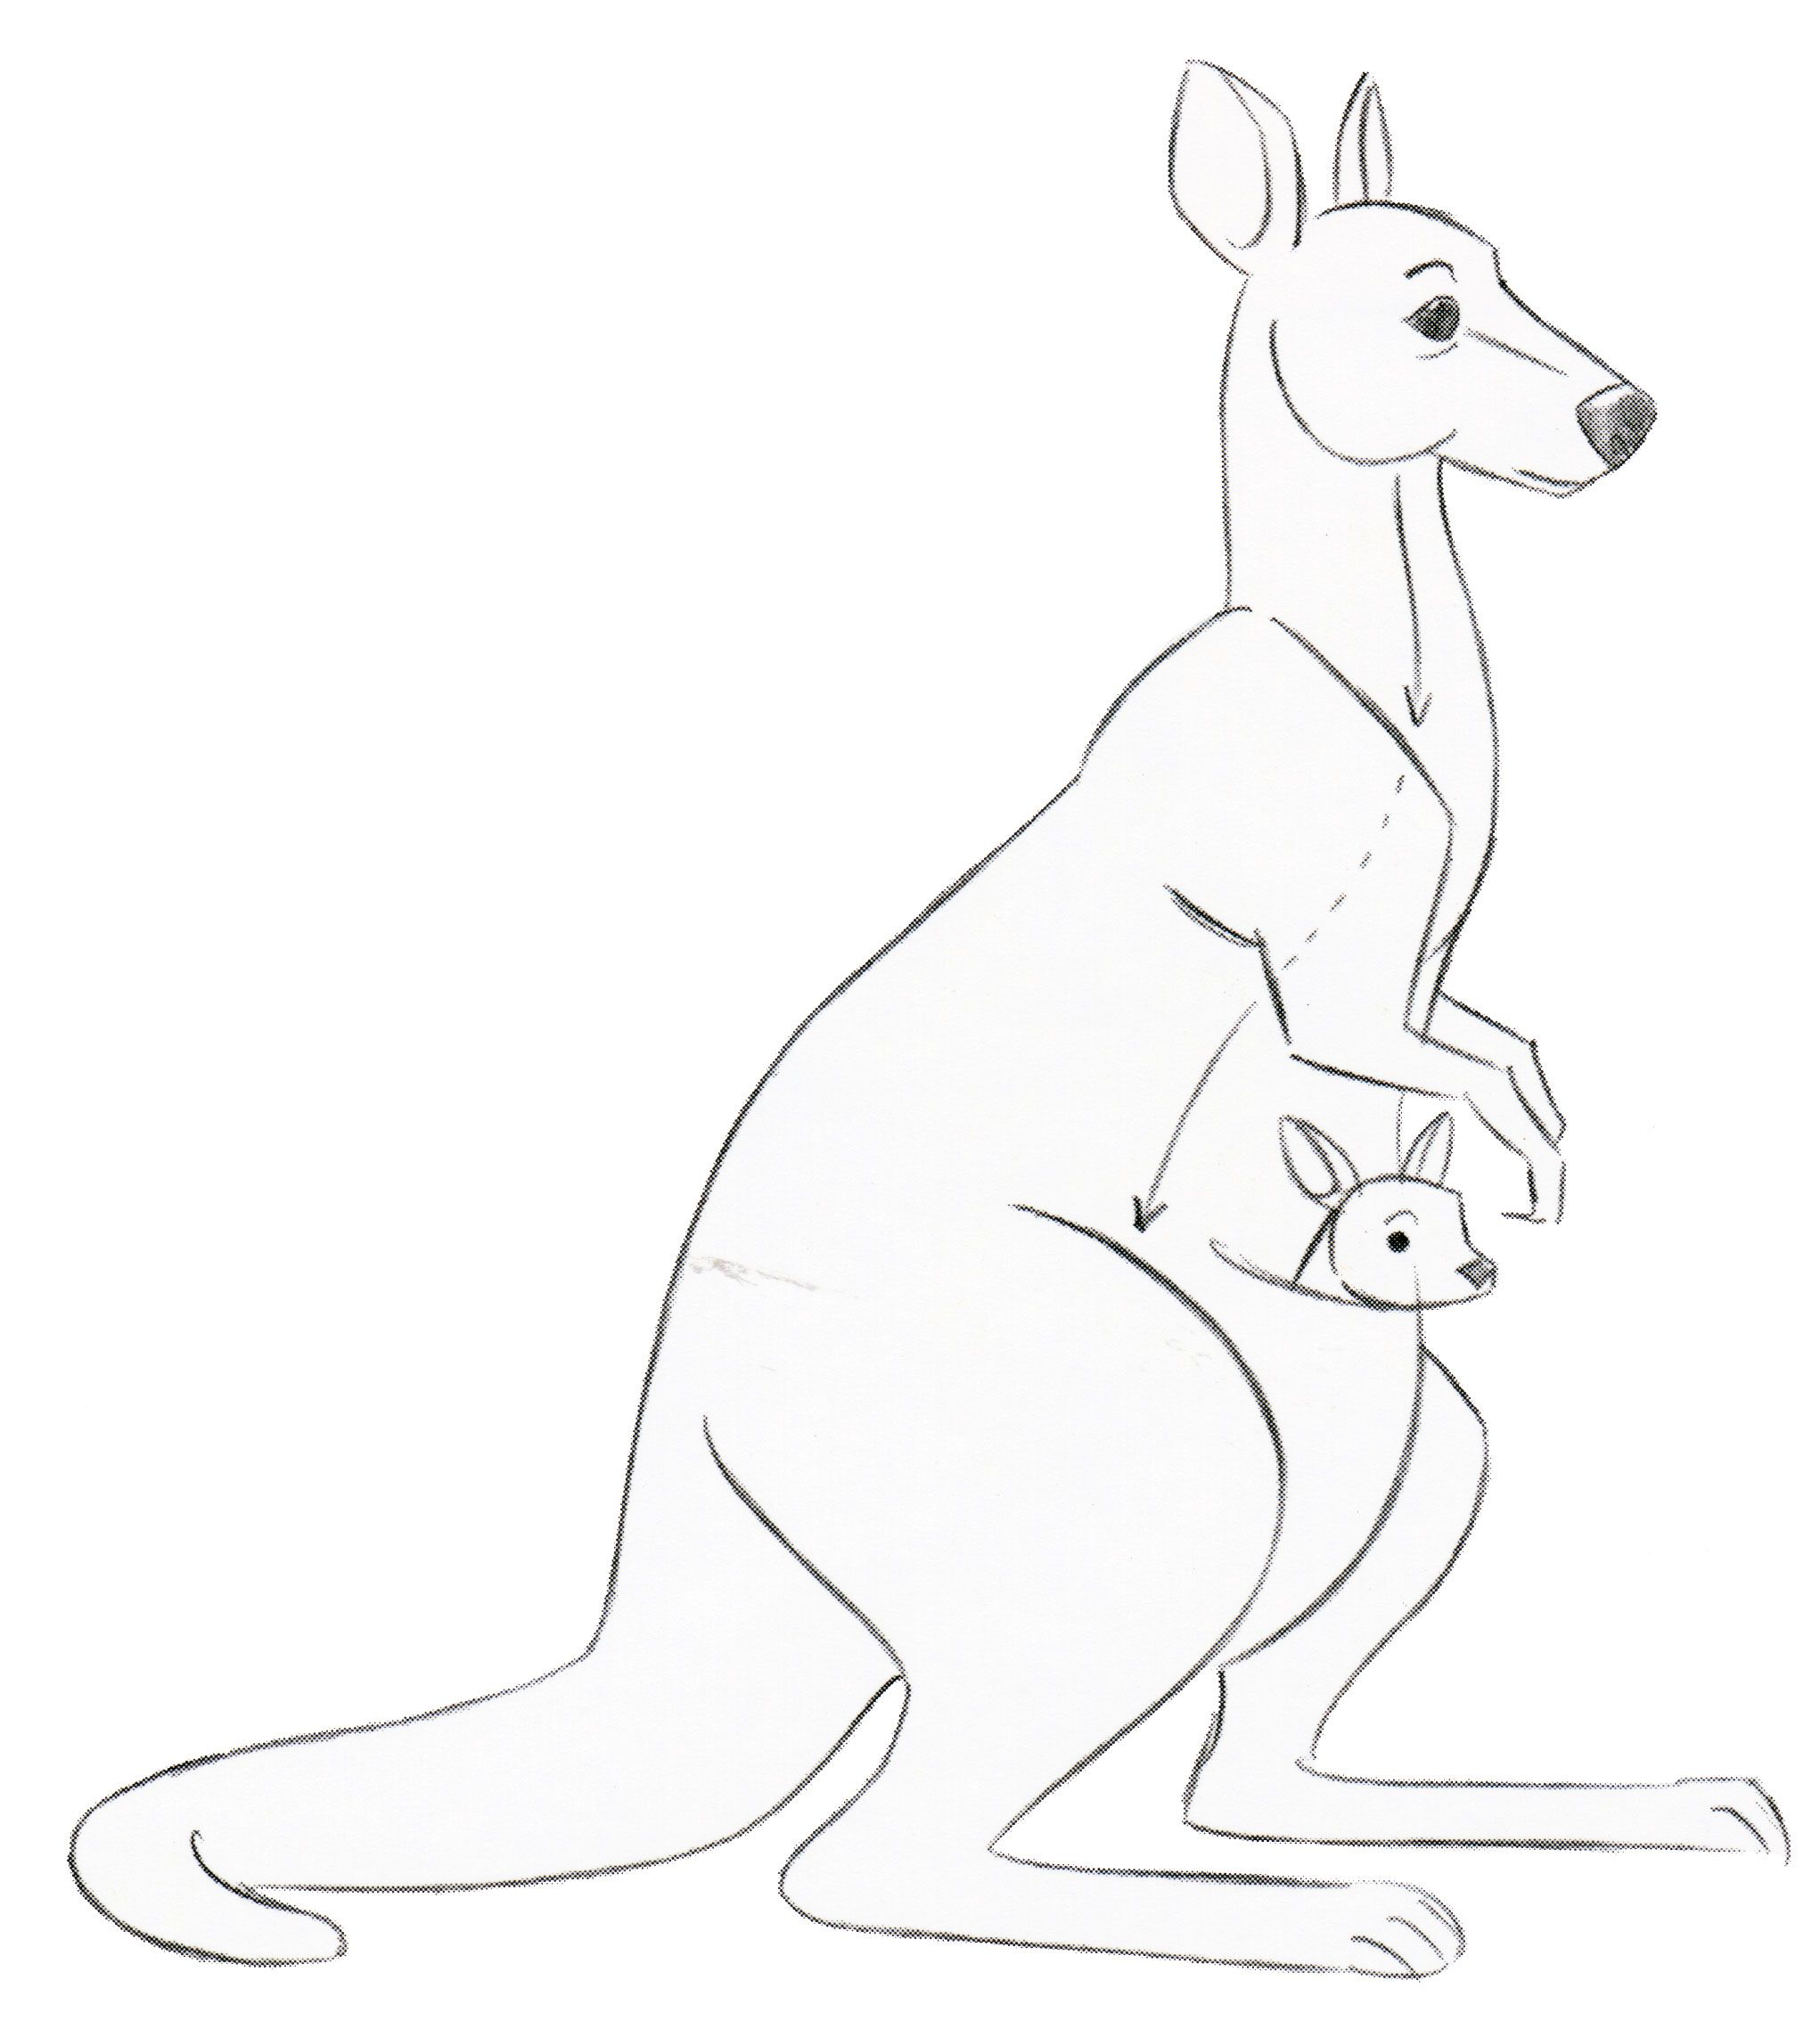 Joey Kangaroo Drawing Image